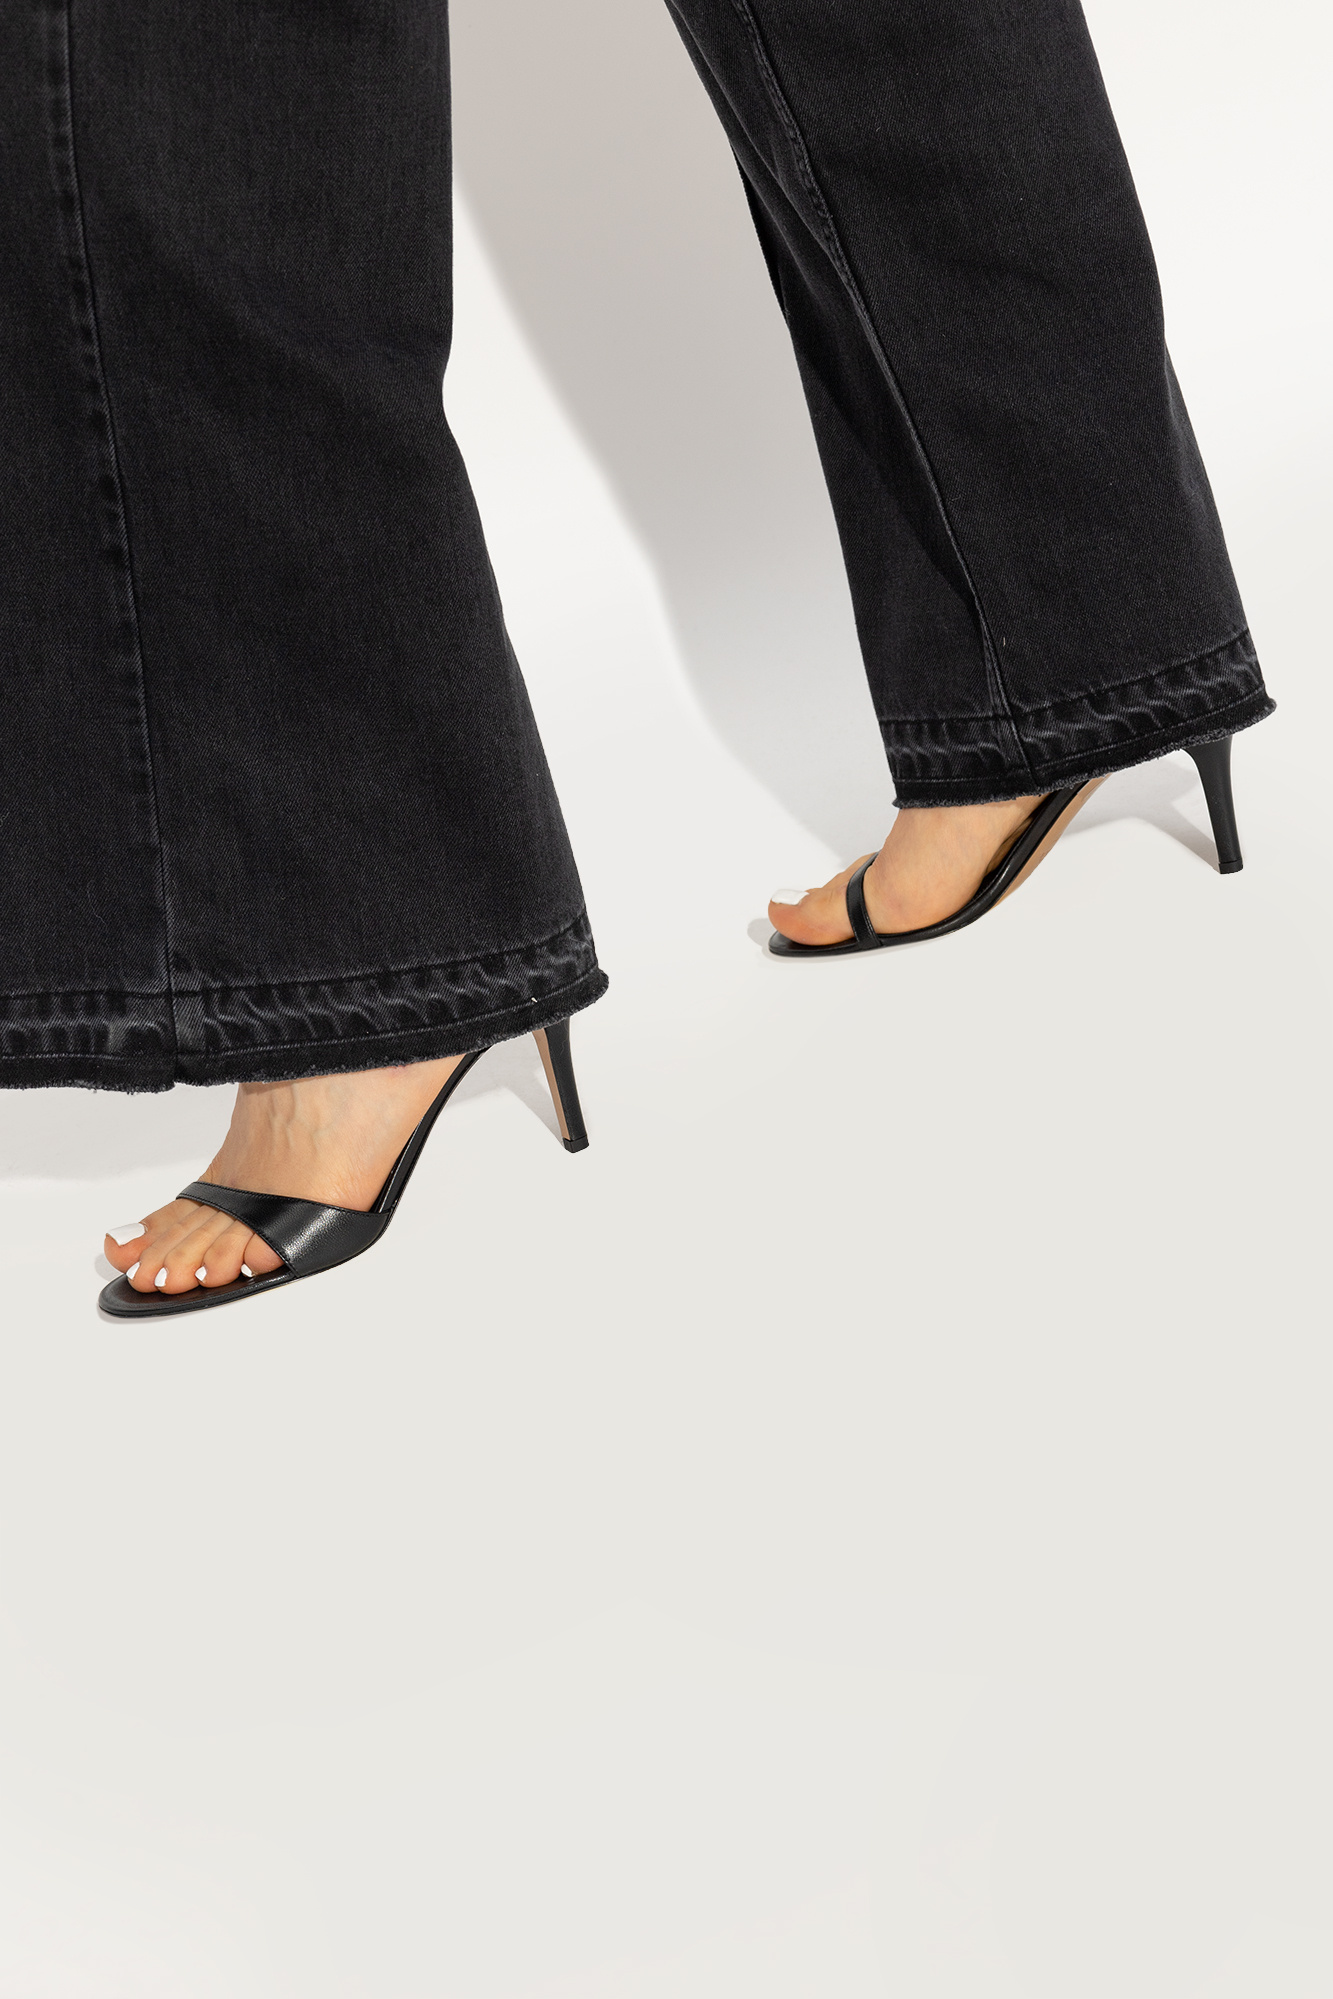 Isabel Marant ‘Ailisa’ heeled sandals in leather